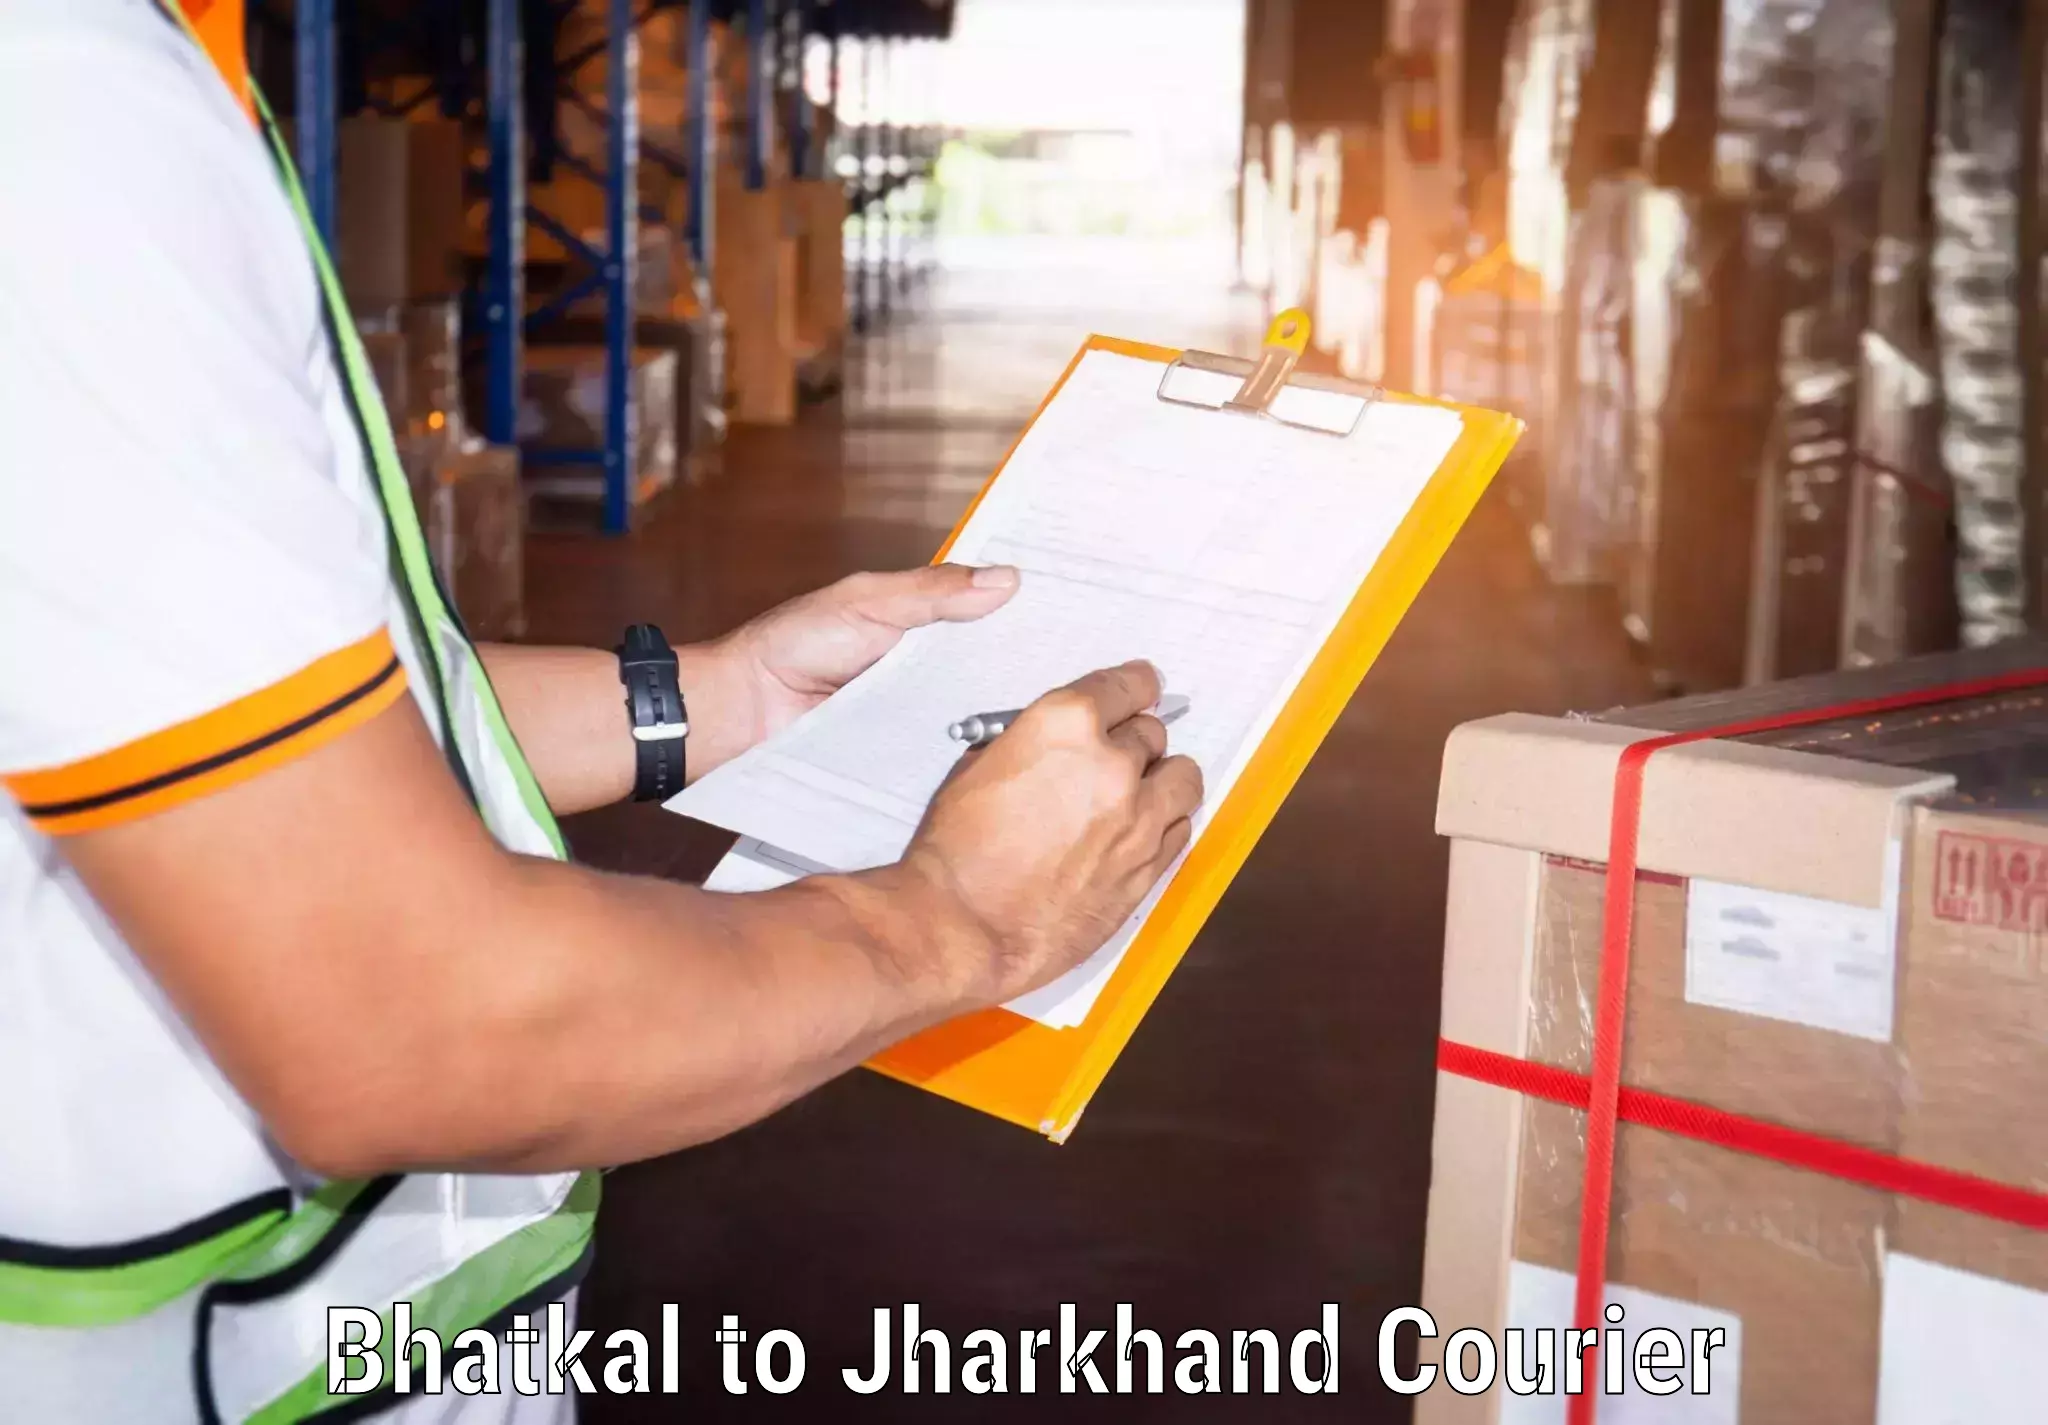 Courier service comparison Bhatkal to Doranda